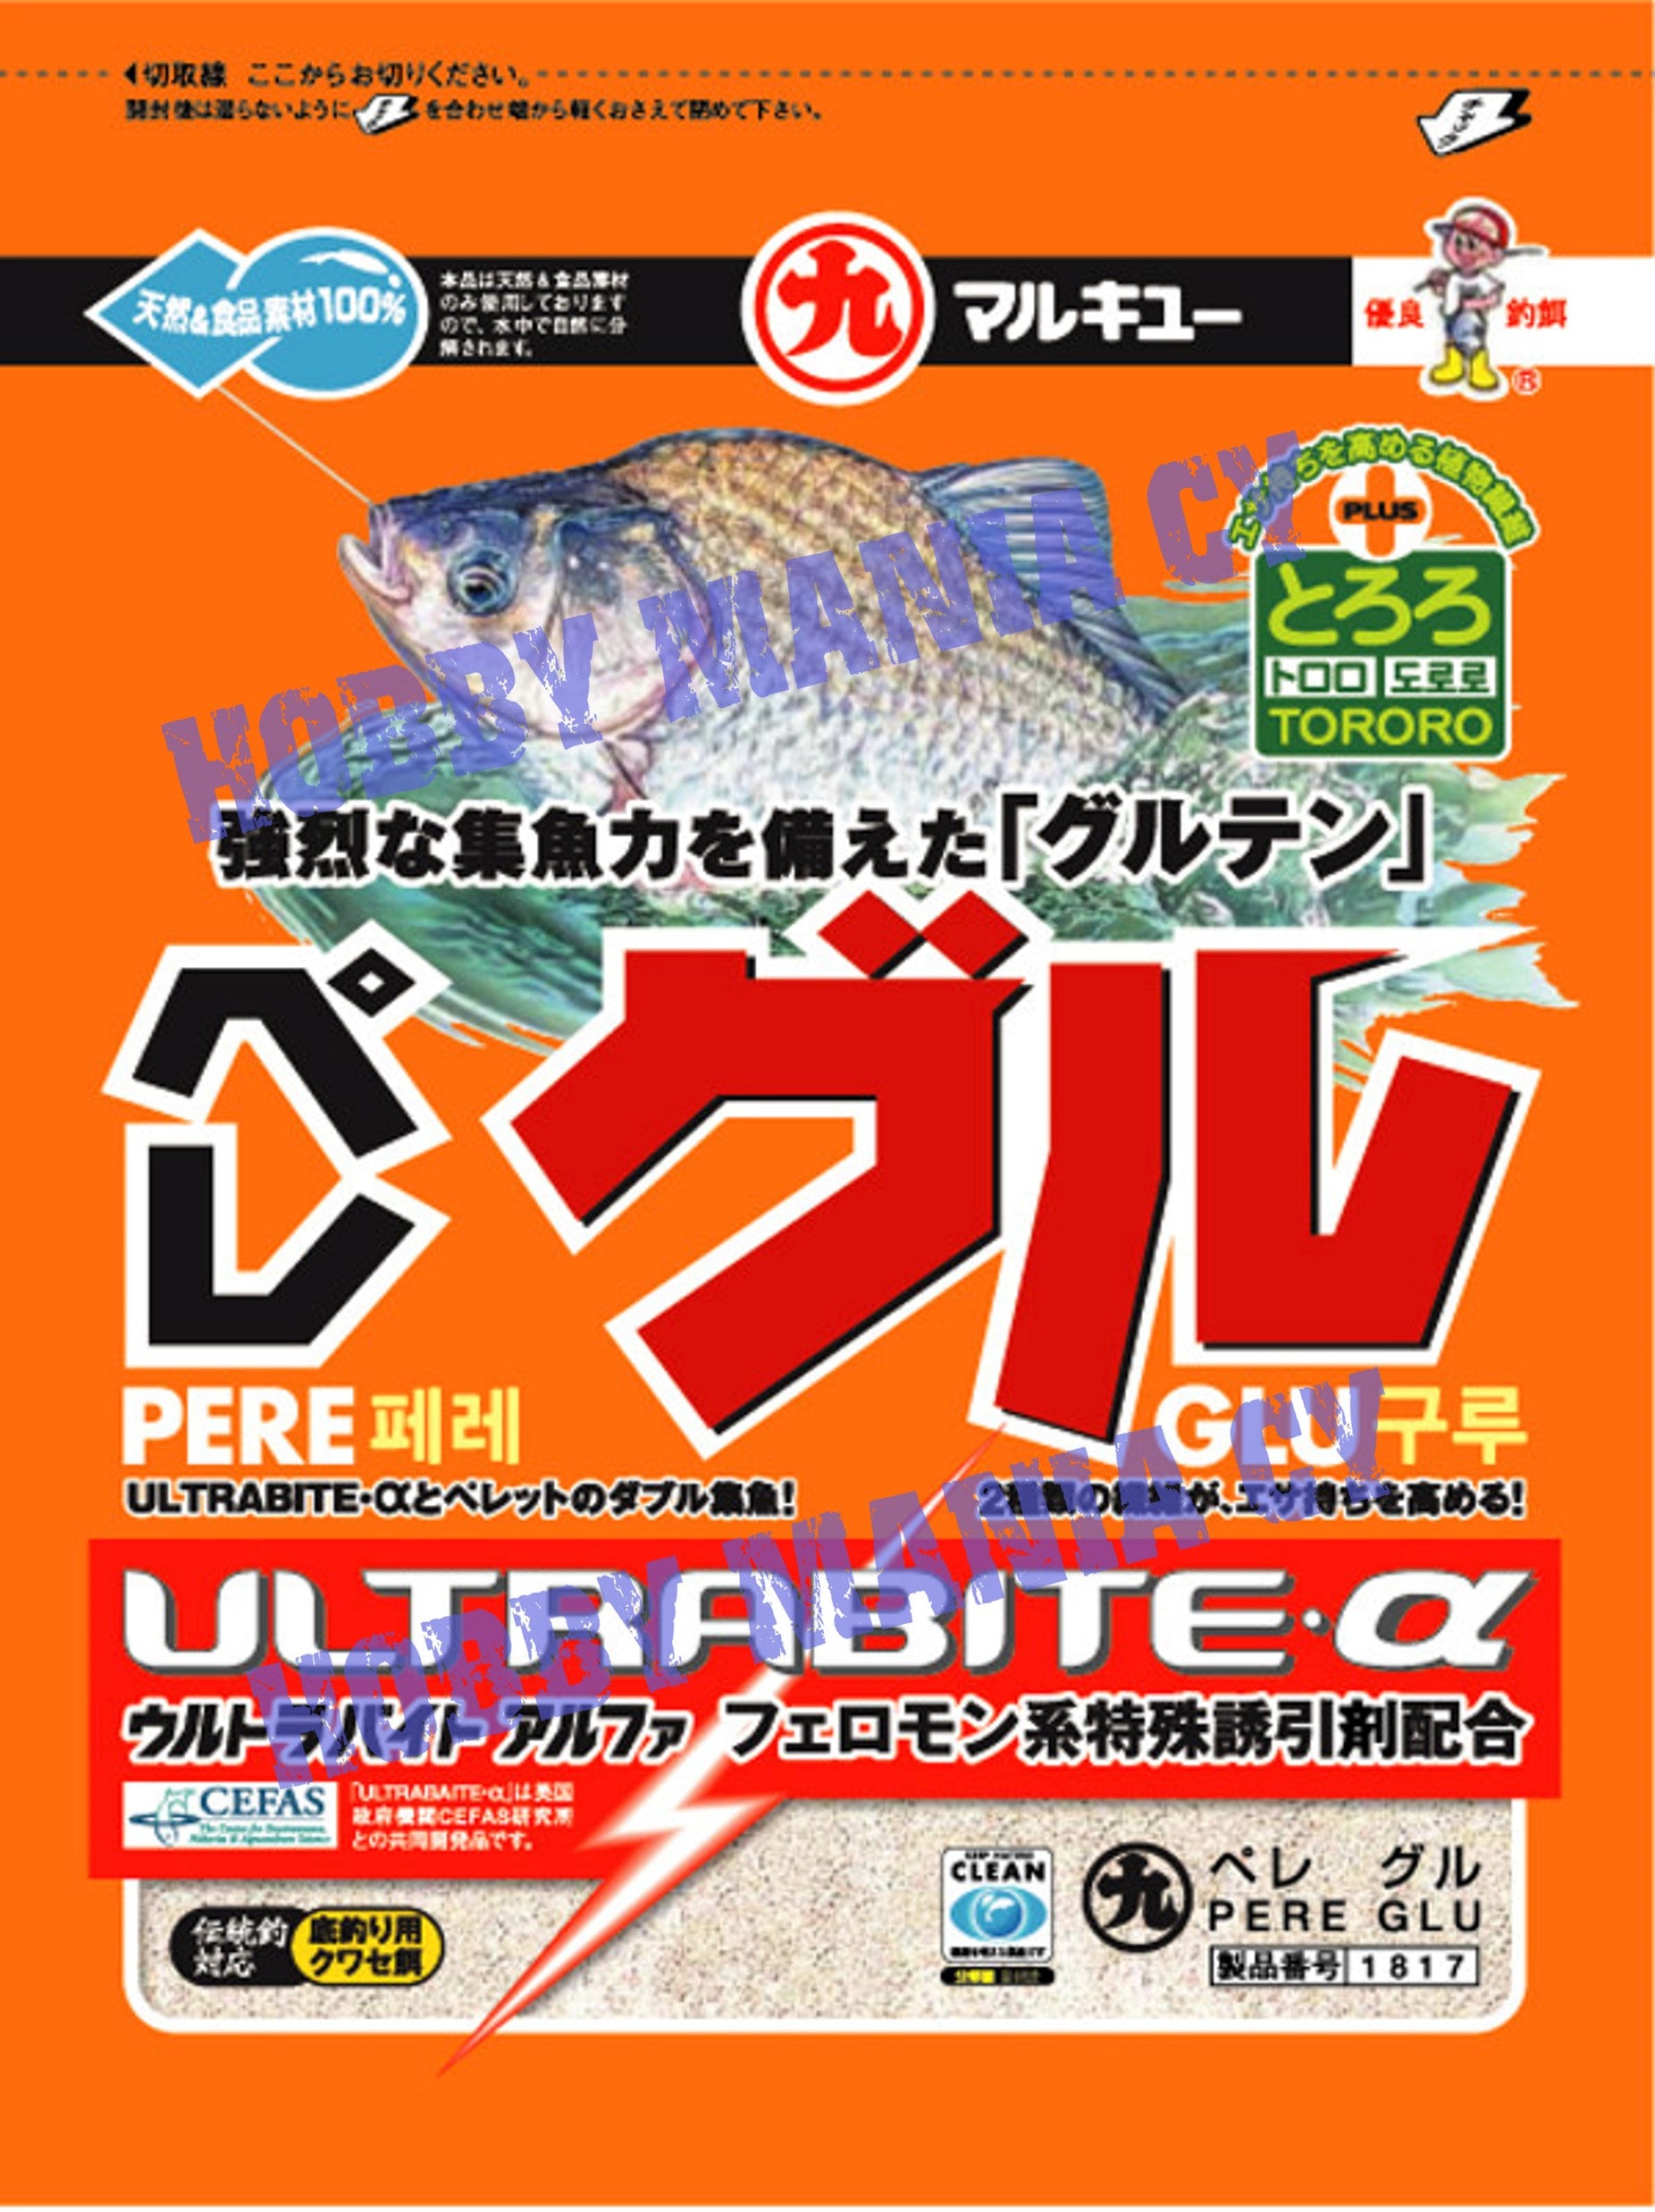 Marukyu Set 100 Ultrabite Fishing liquid baits FISHING ATTRACTANTS